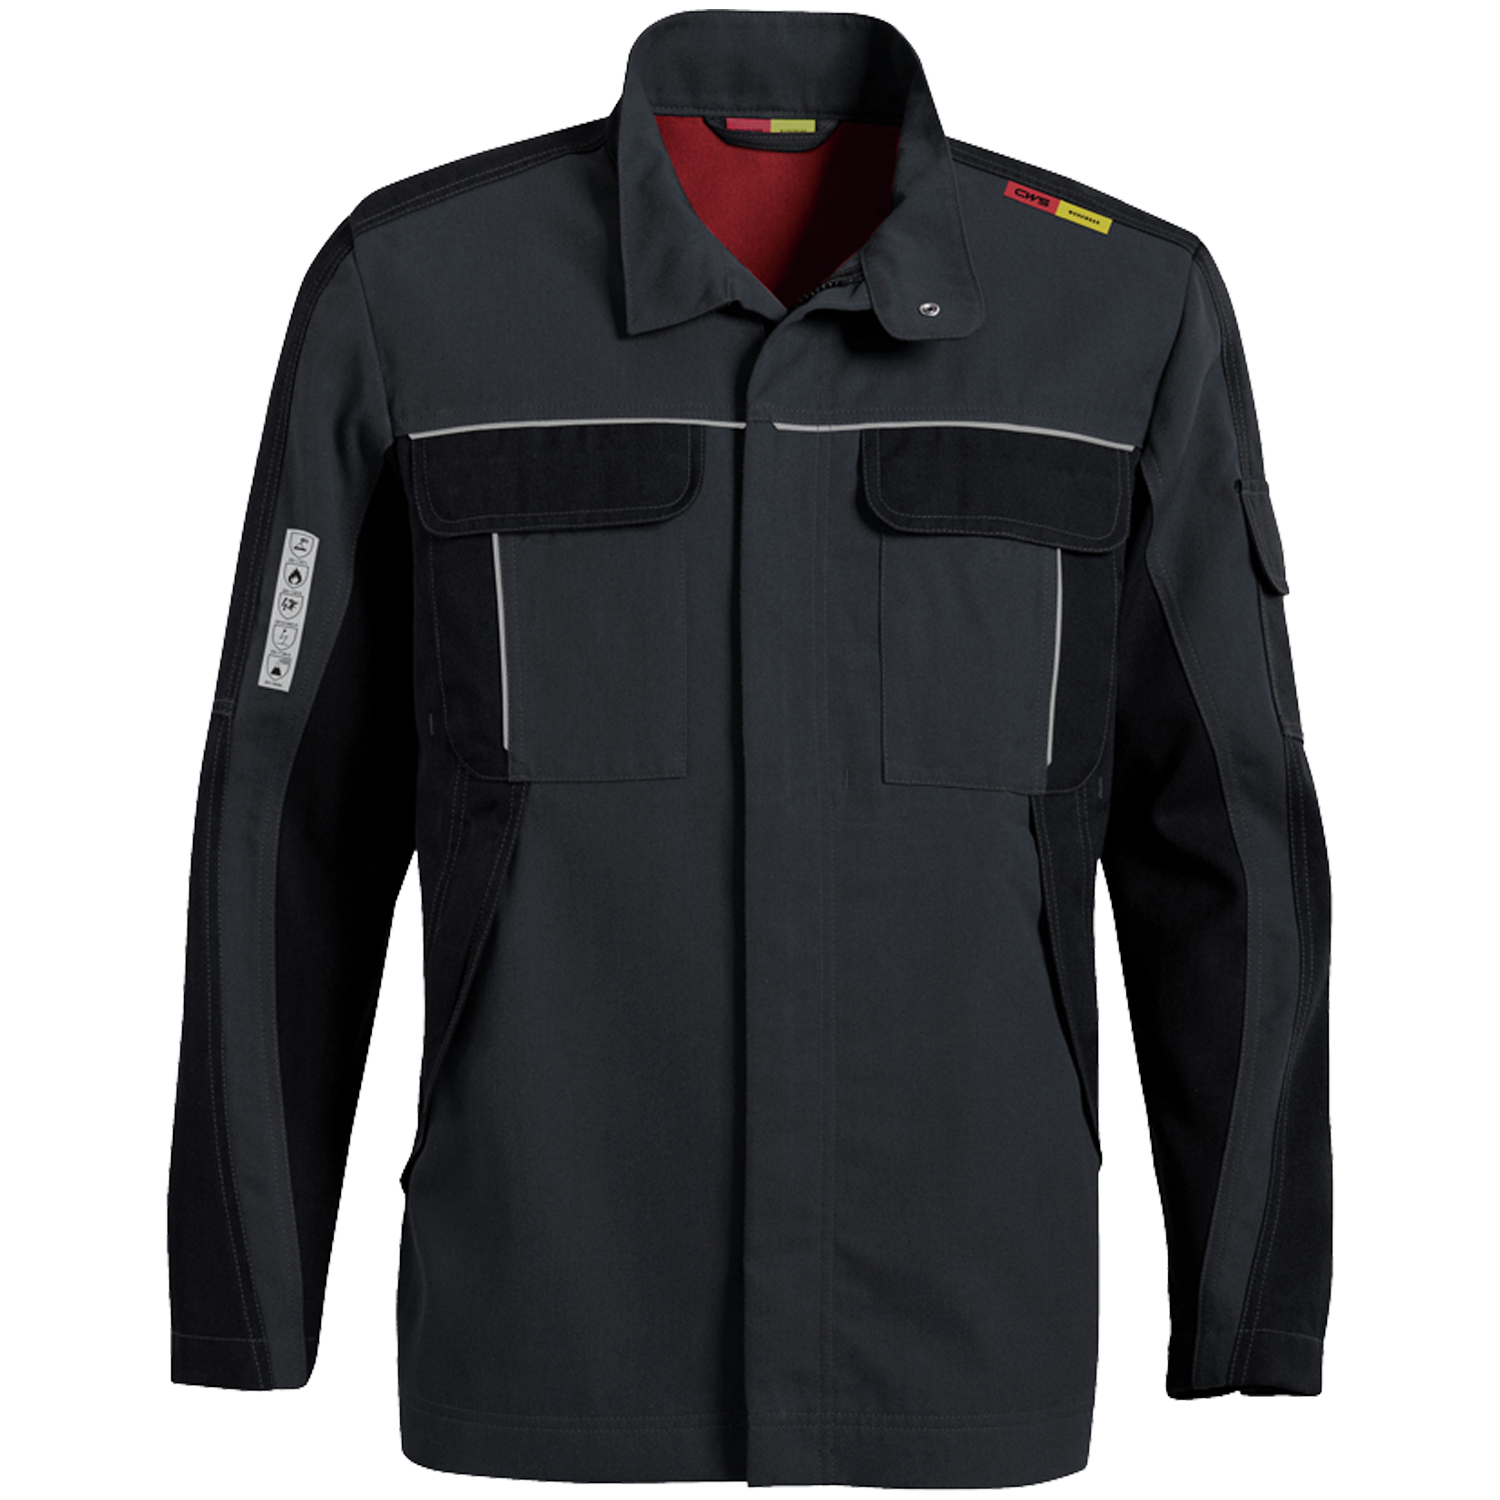 CWS Profi Line Protection: Work jacket